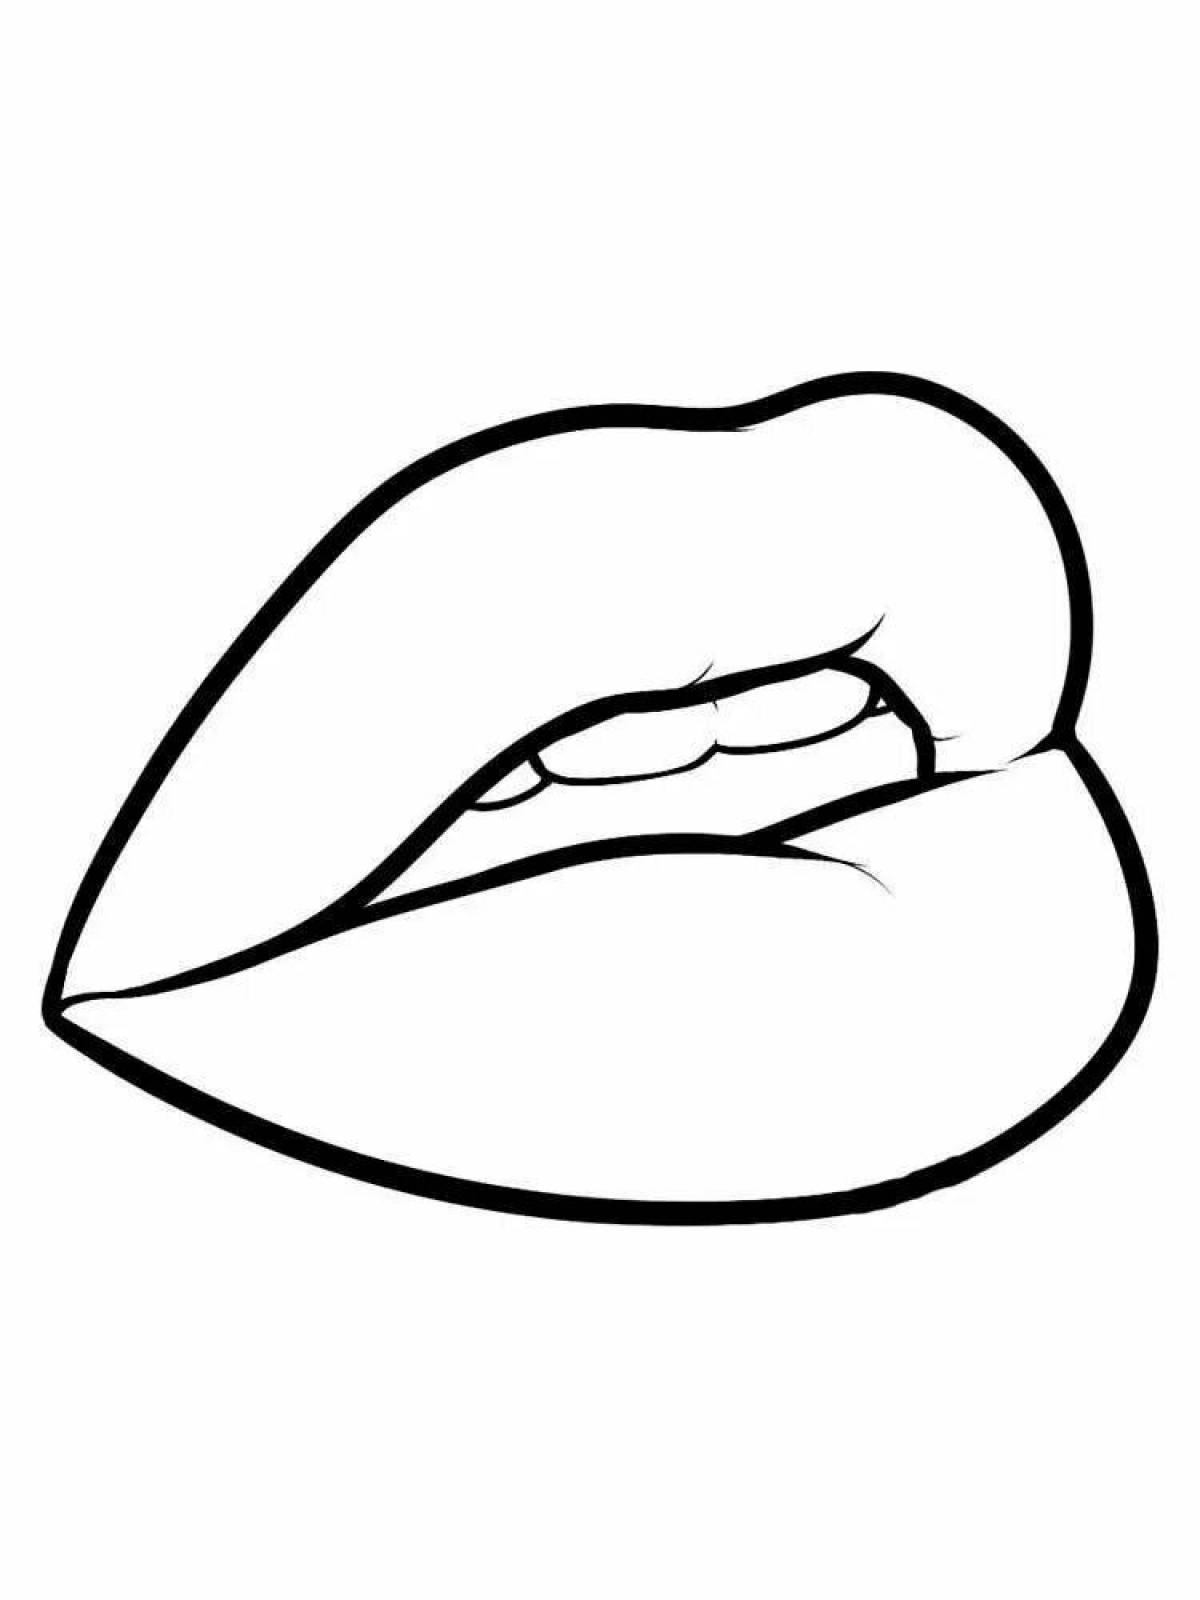 Hypnotic lips drawing